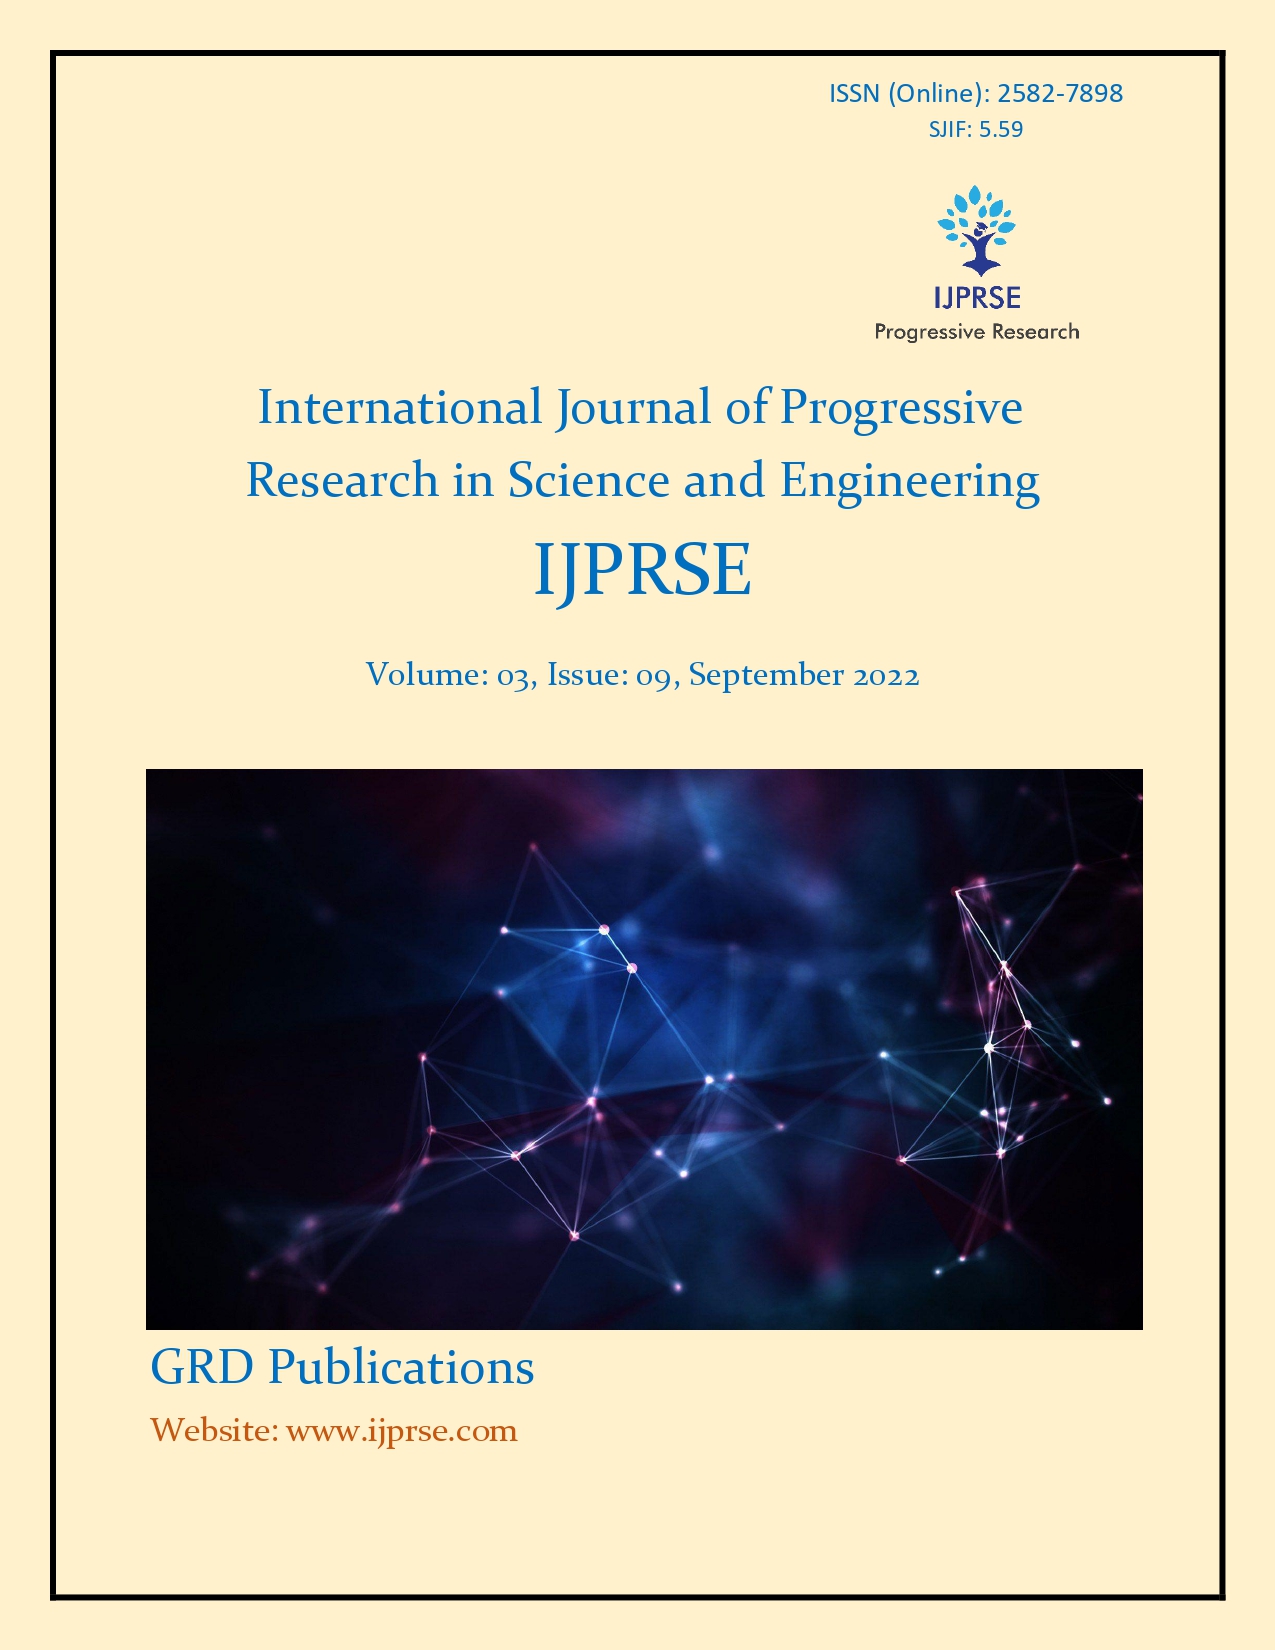 publish a research paper as an undergraduate